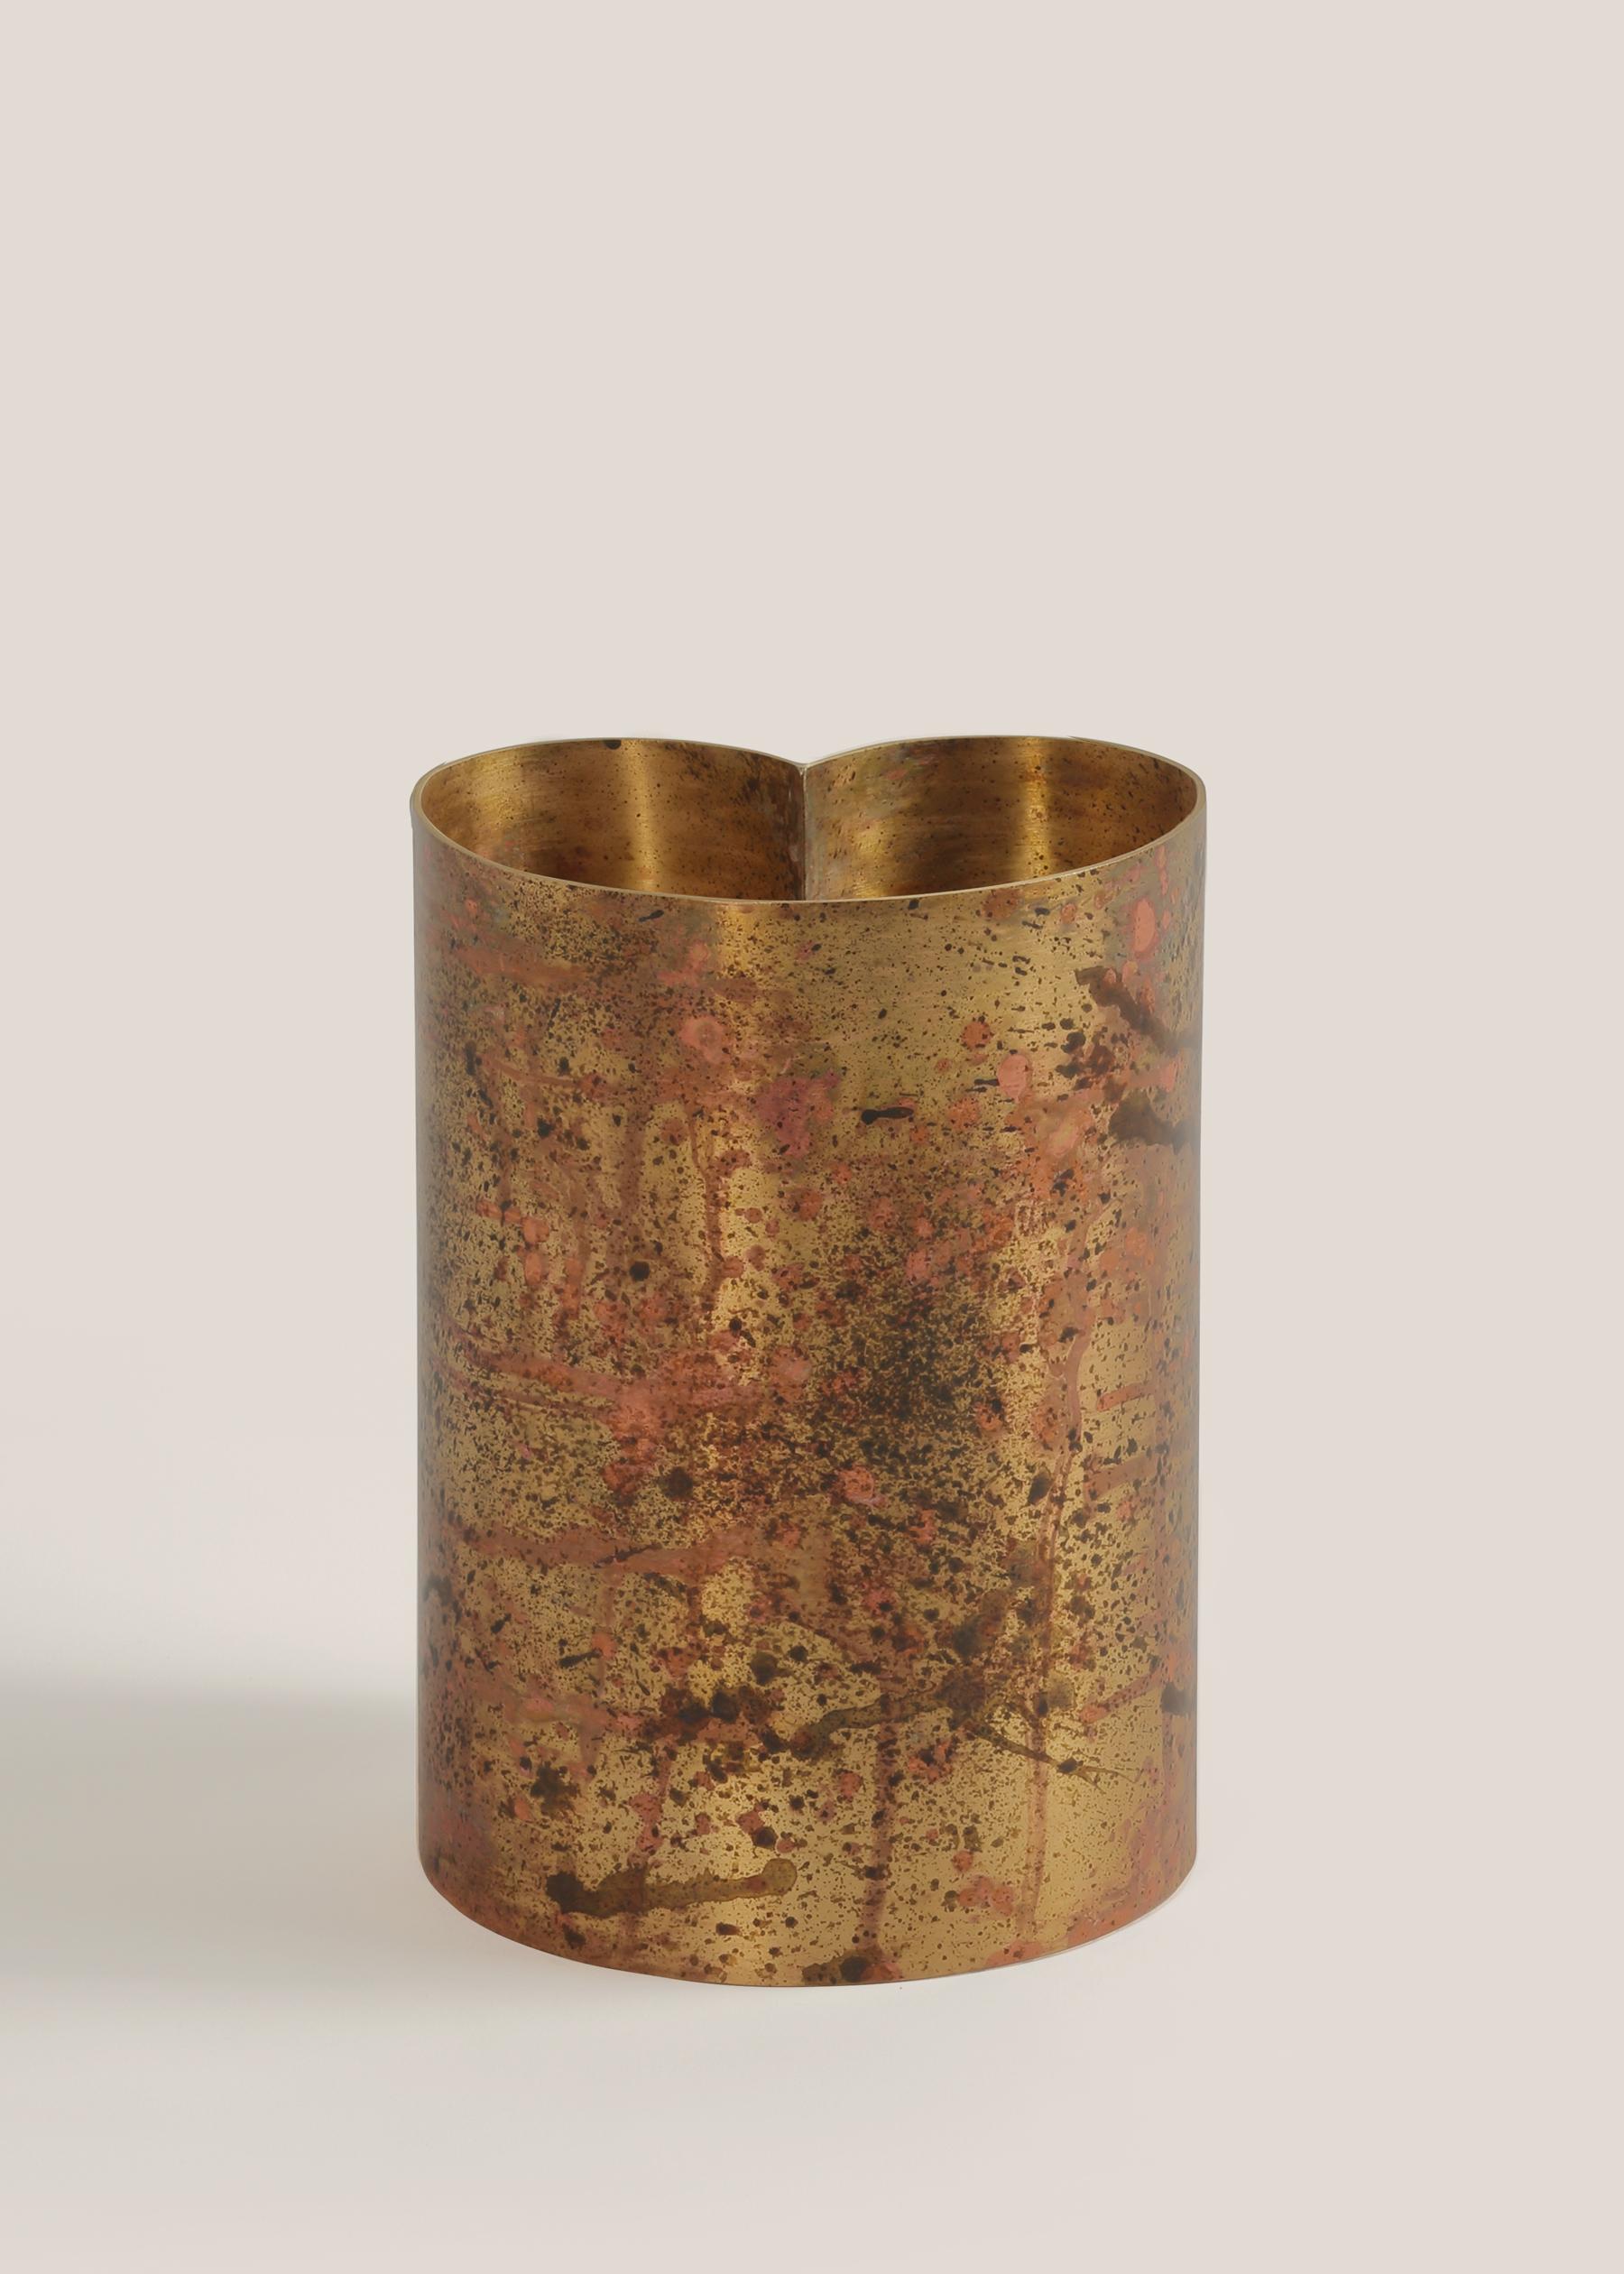 Welded ‘Type’ #4, Vase by Jamie Wolfond